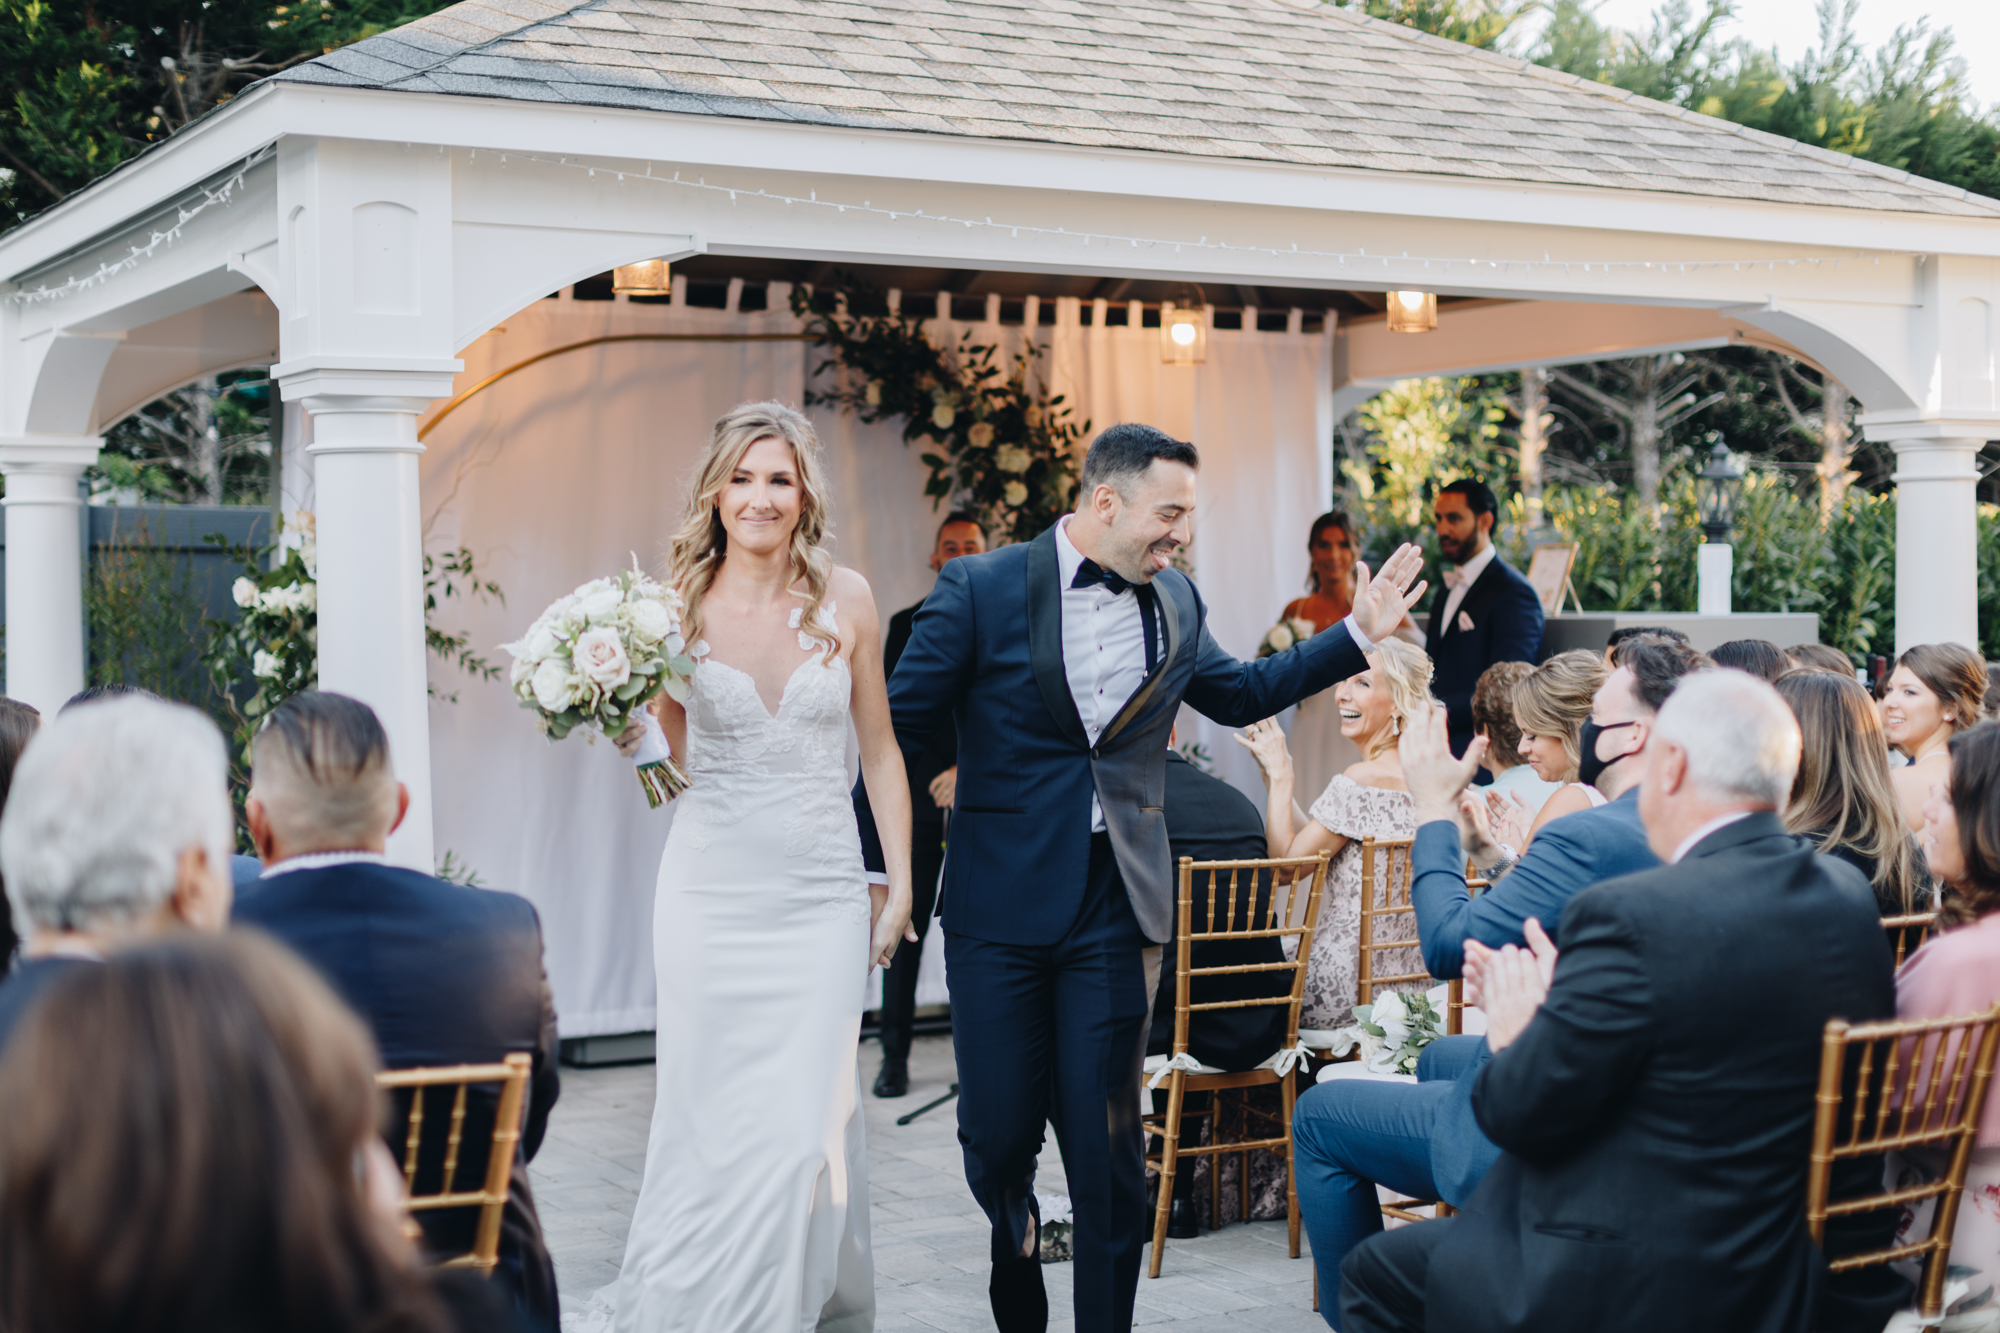 Chic backyard wedding inspiration on Long Island